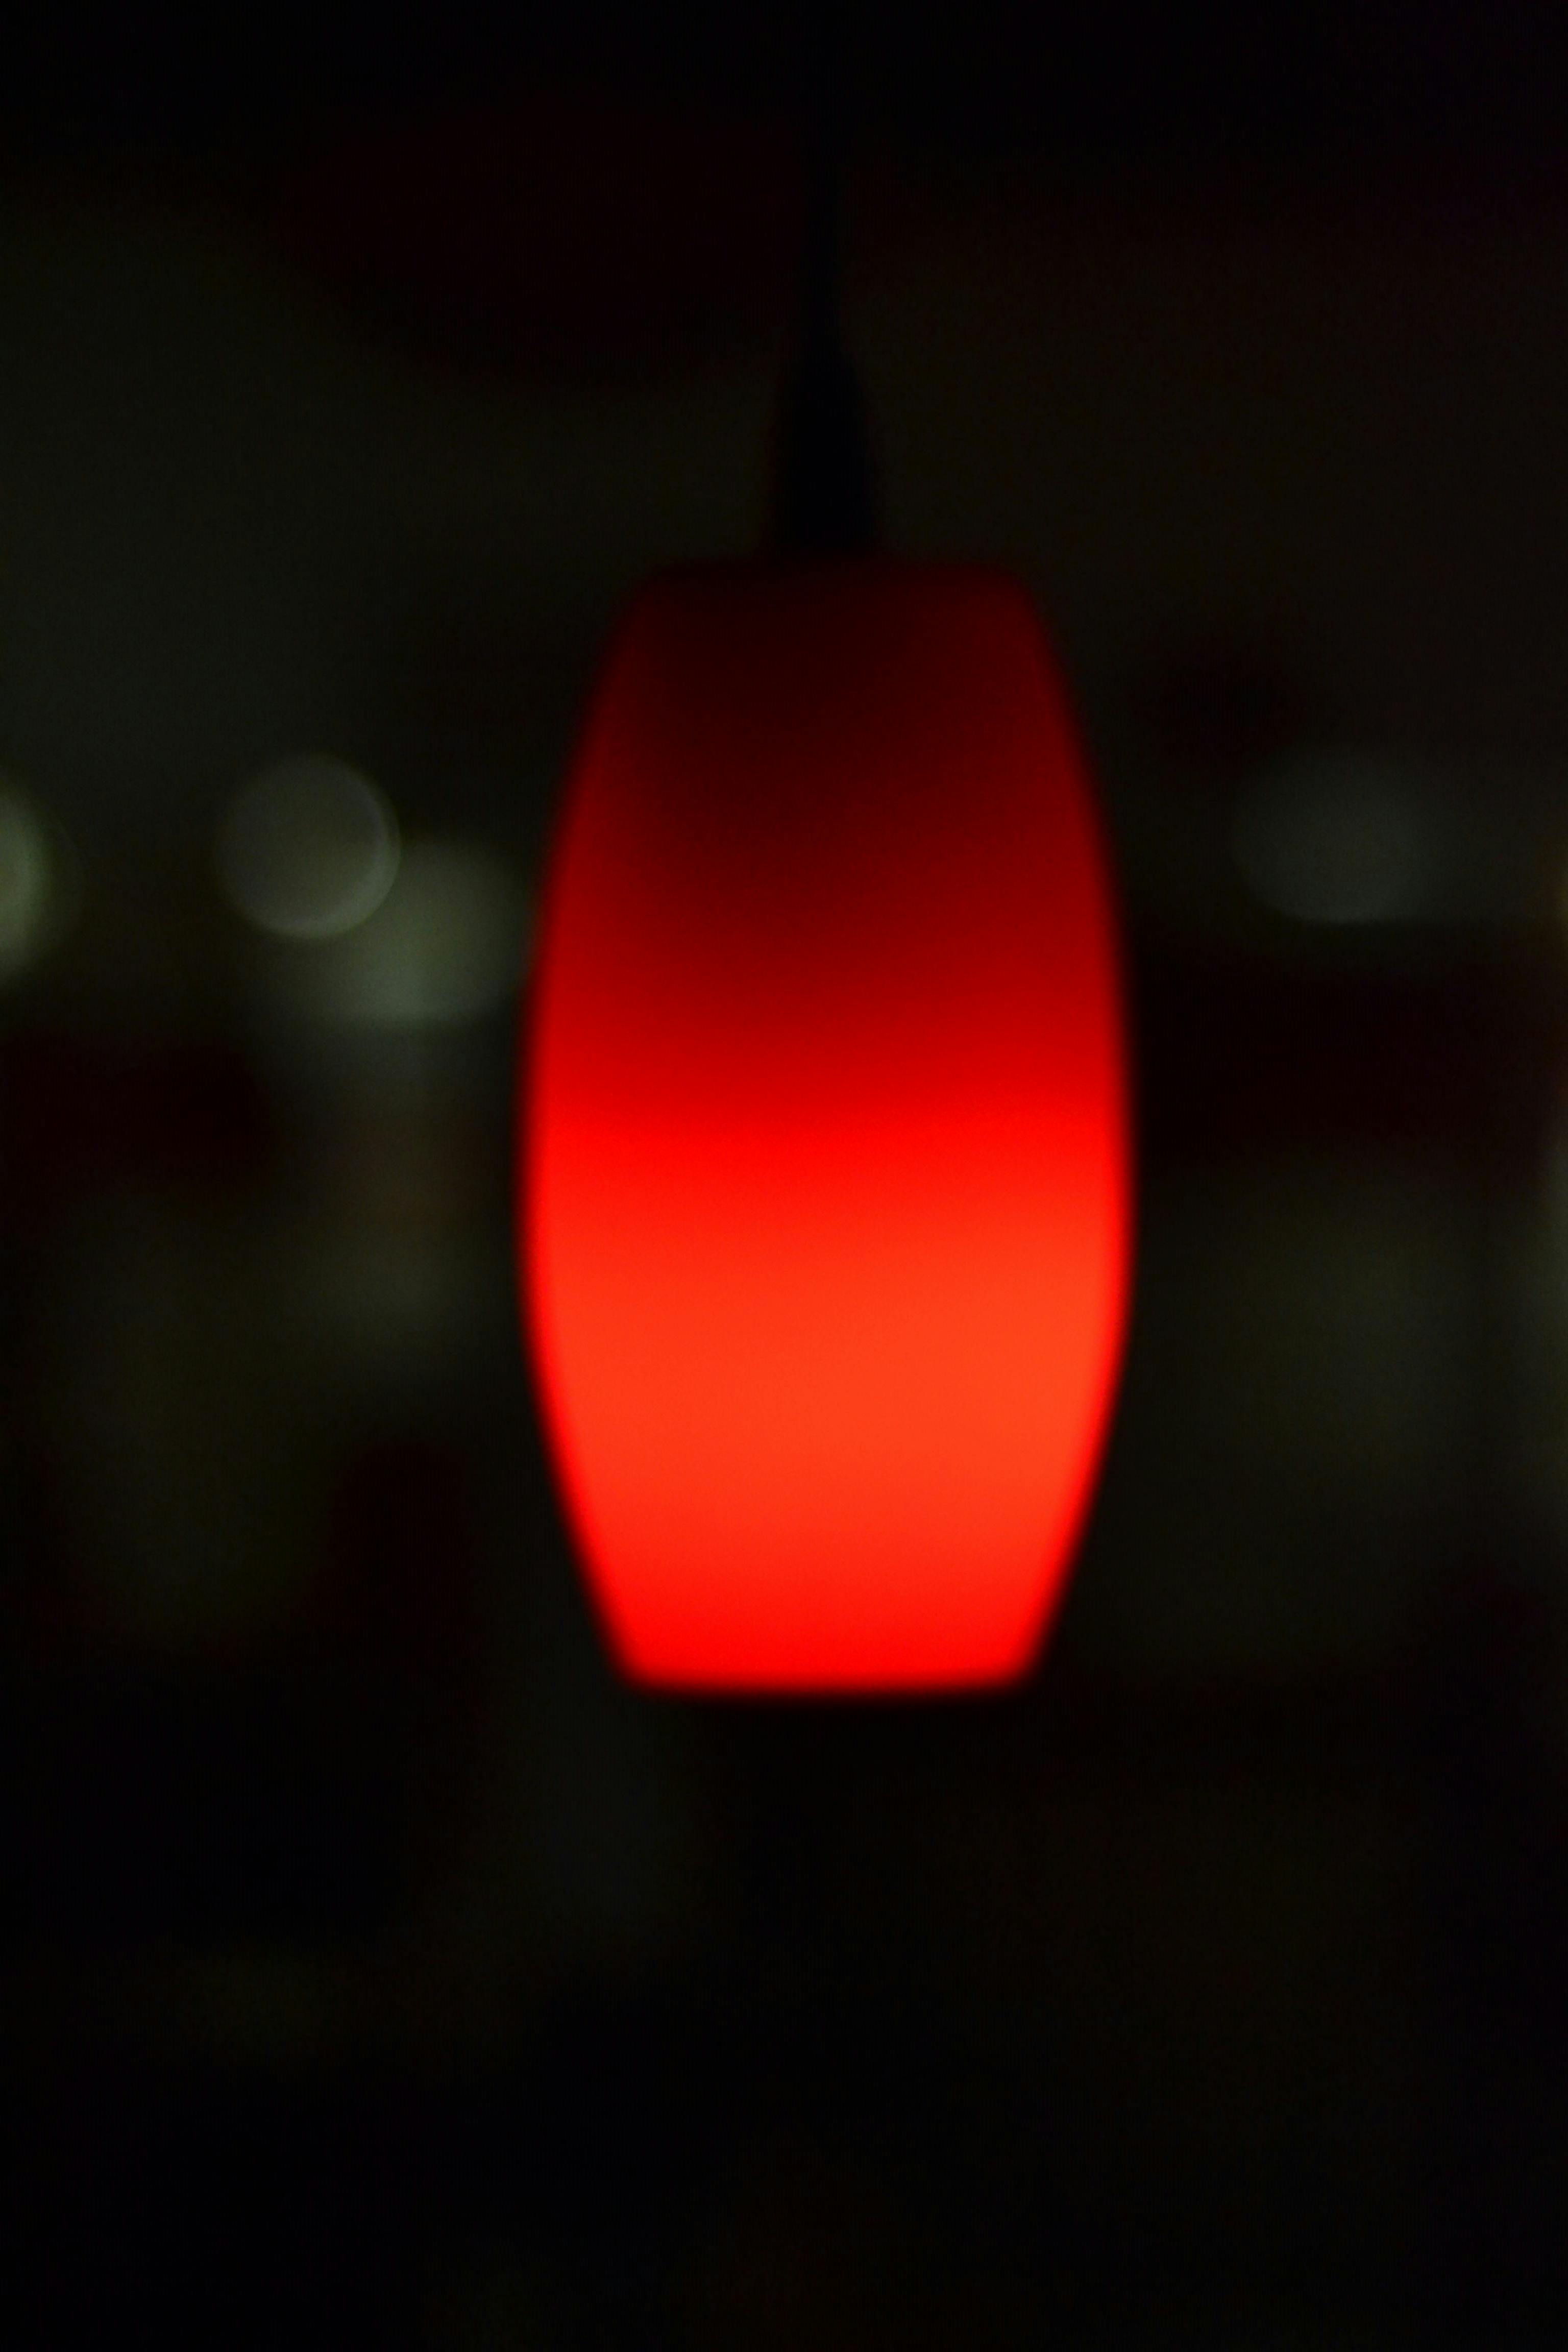 Free stock photo of Pendant Light, red light